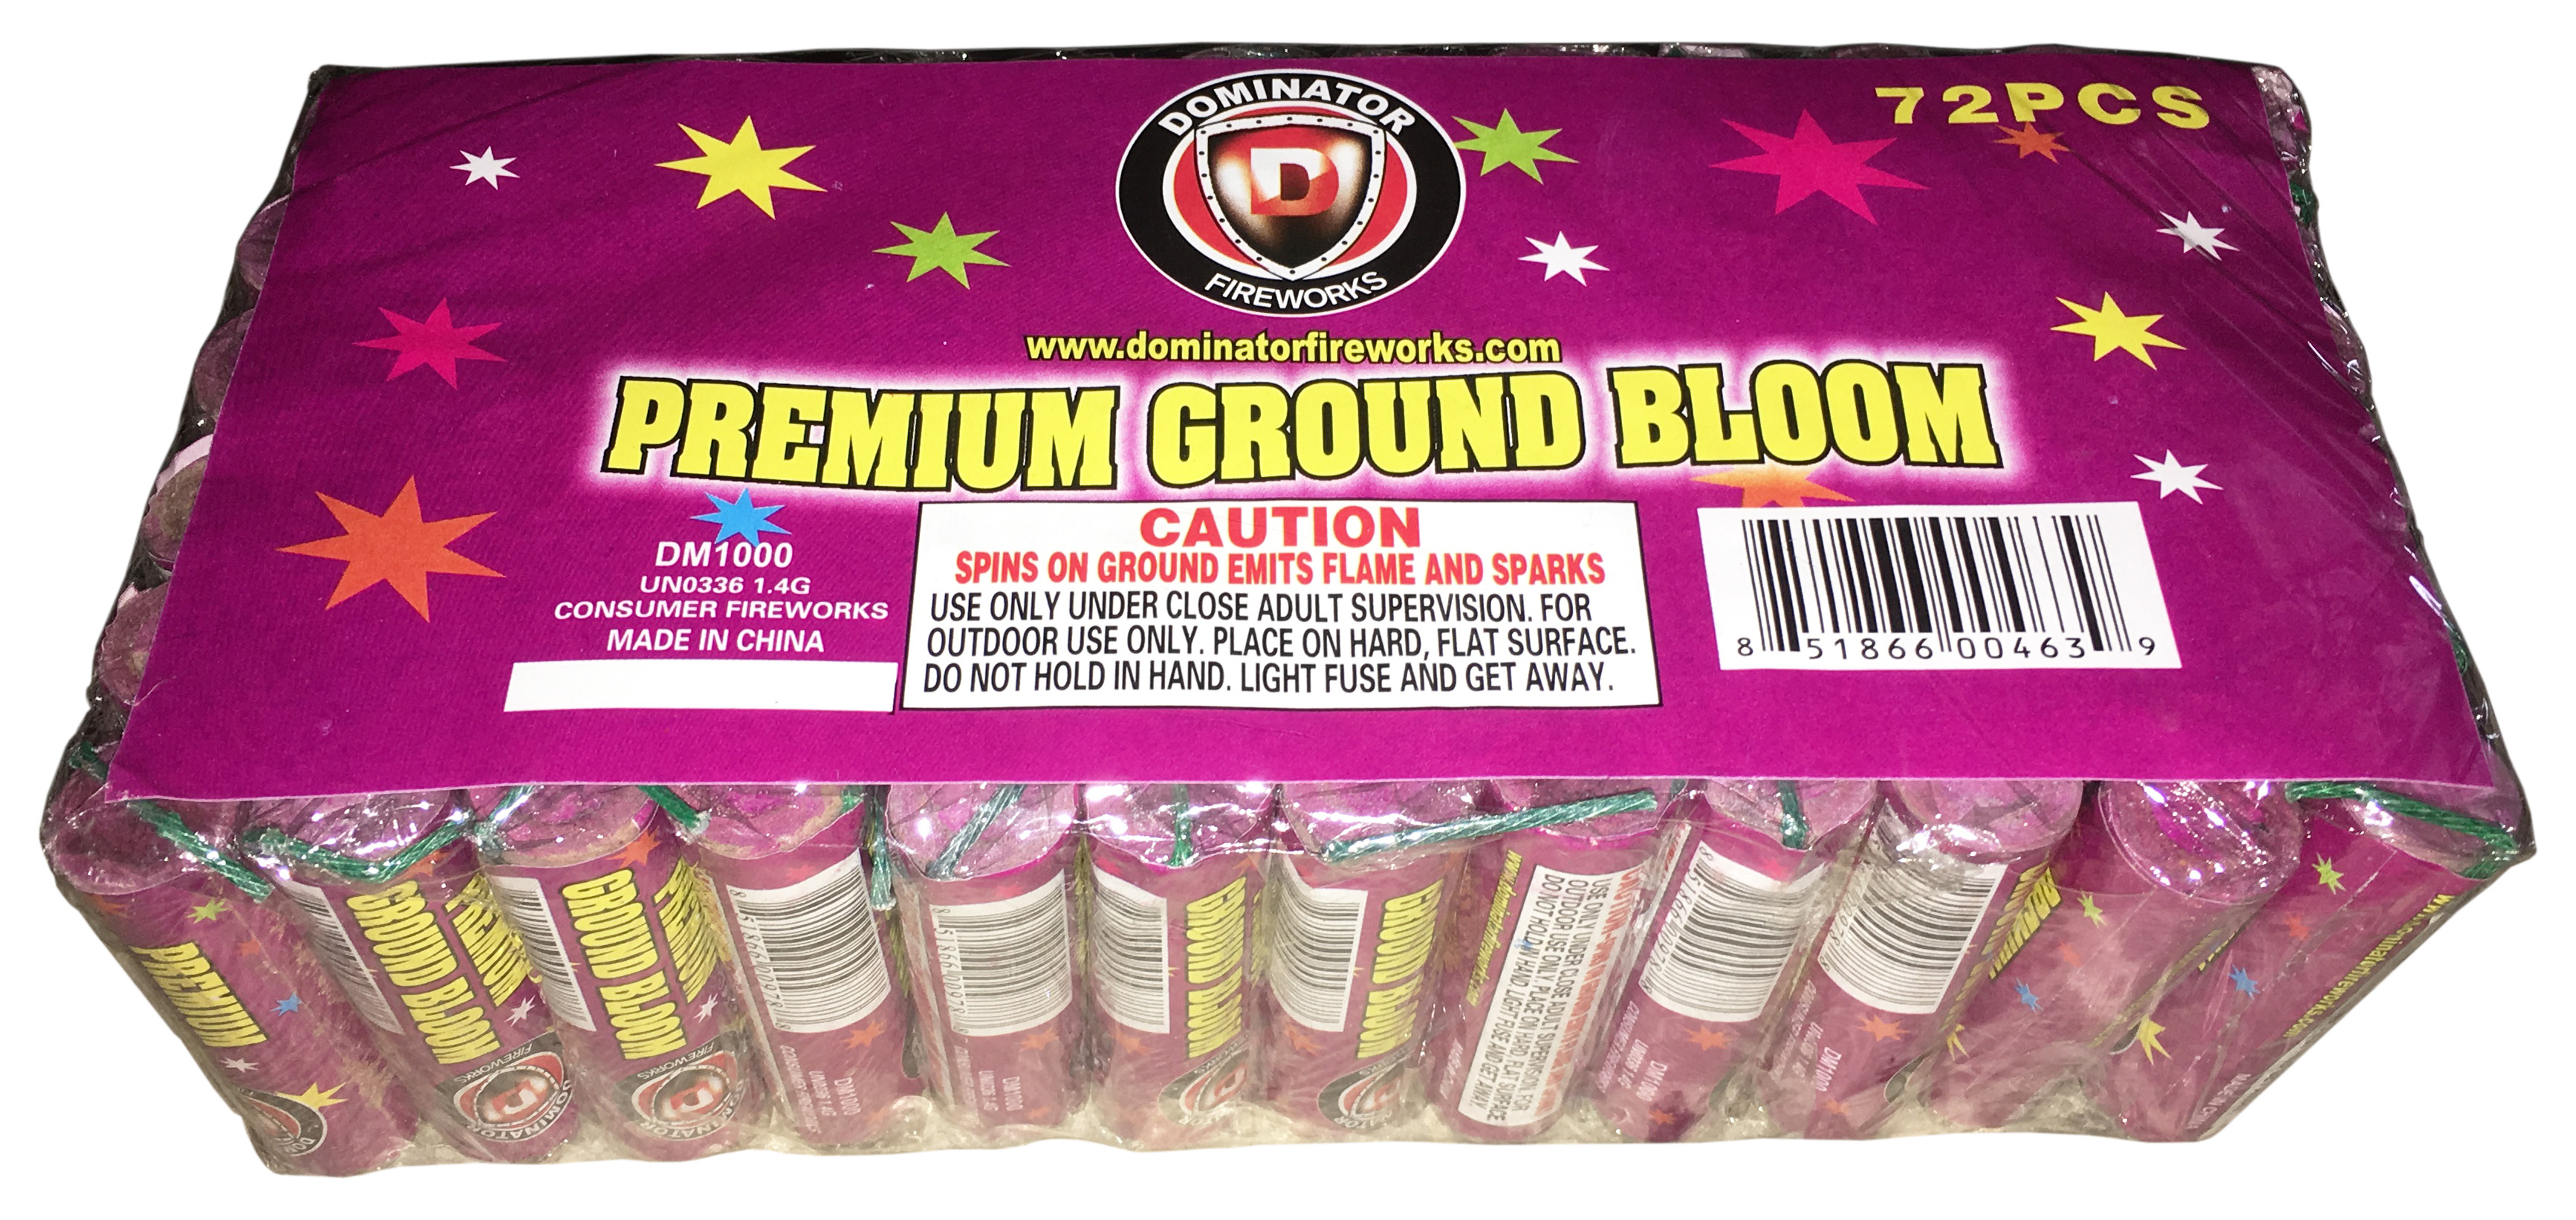 Premium Ground Bloom